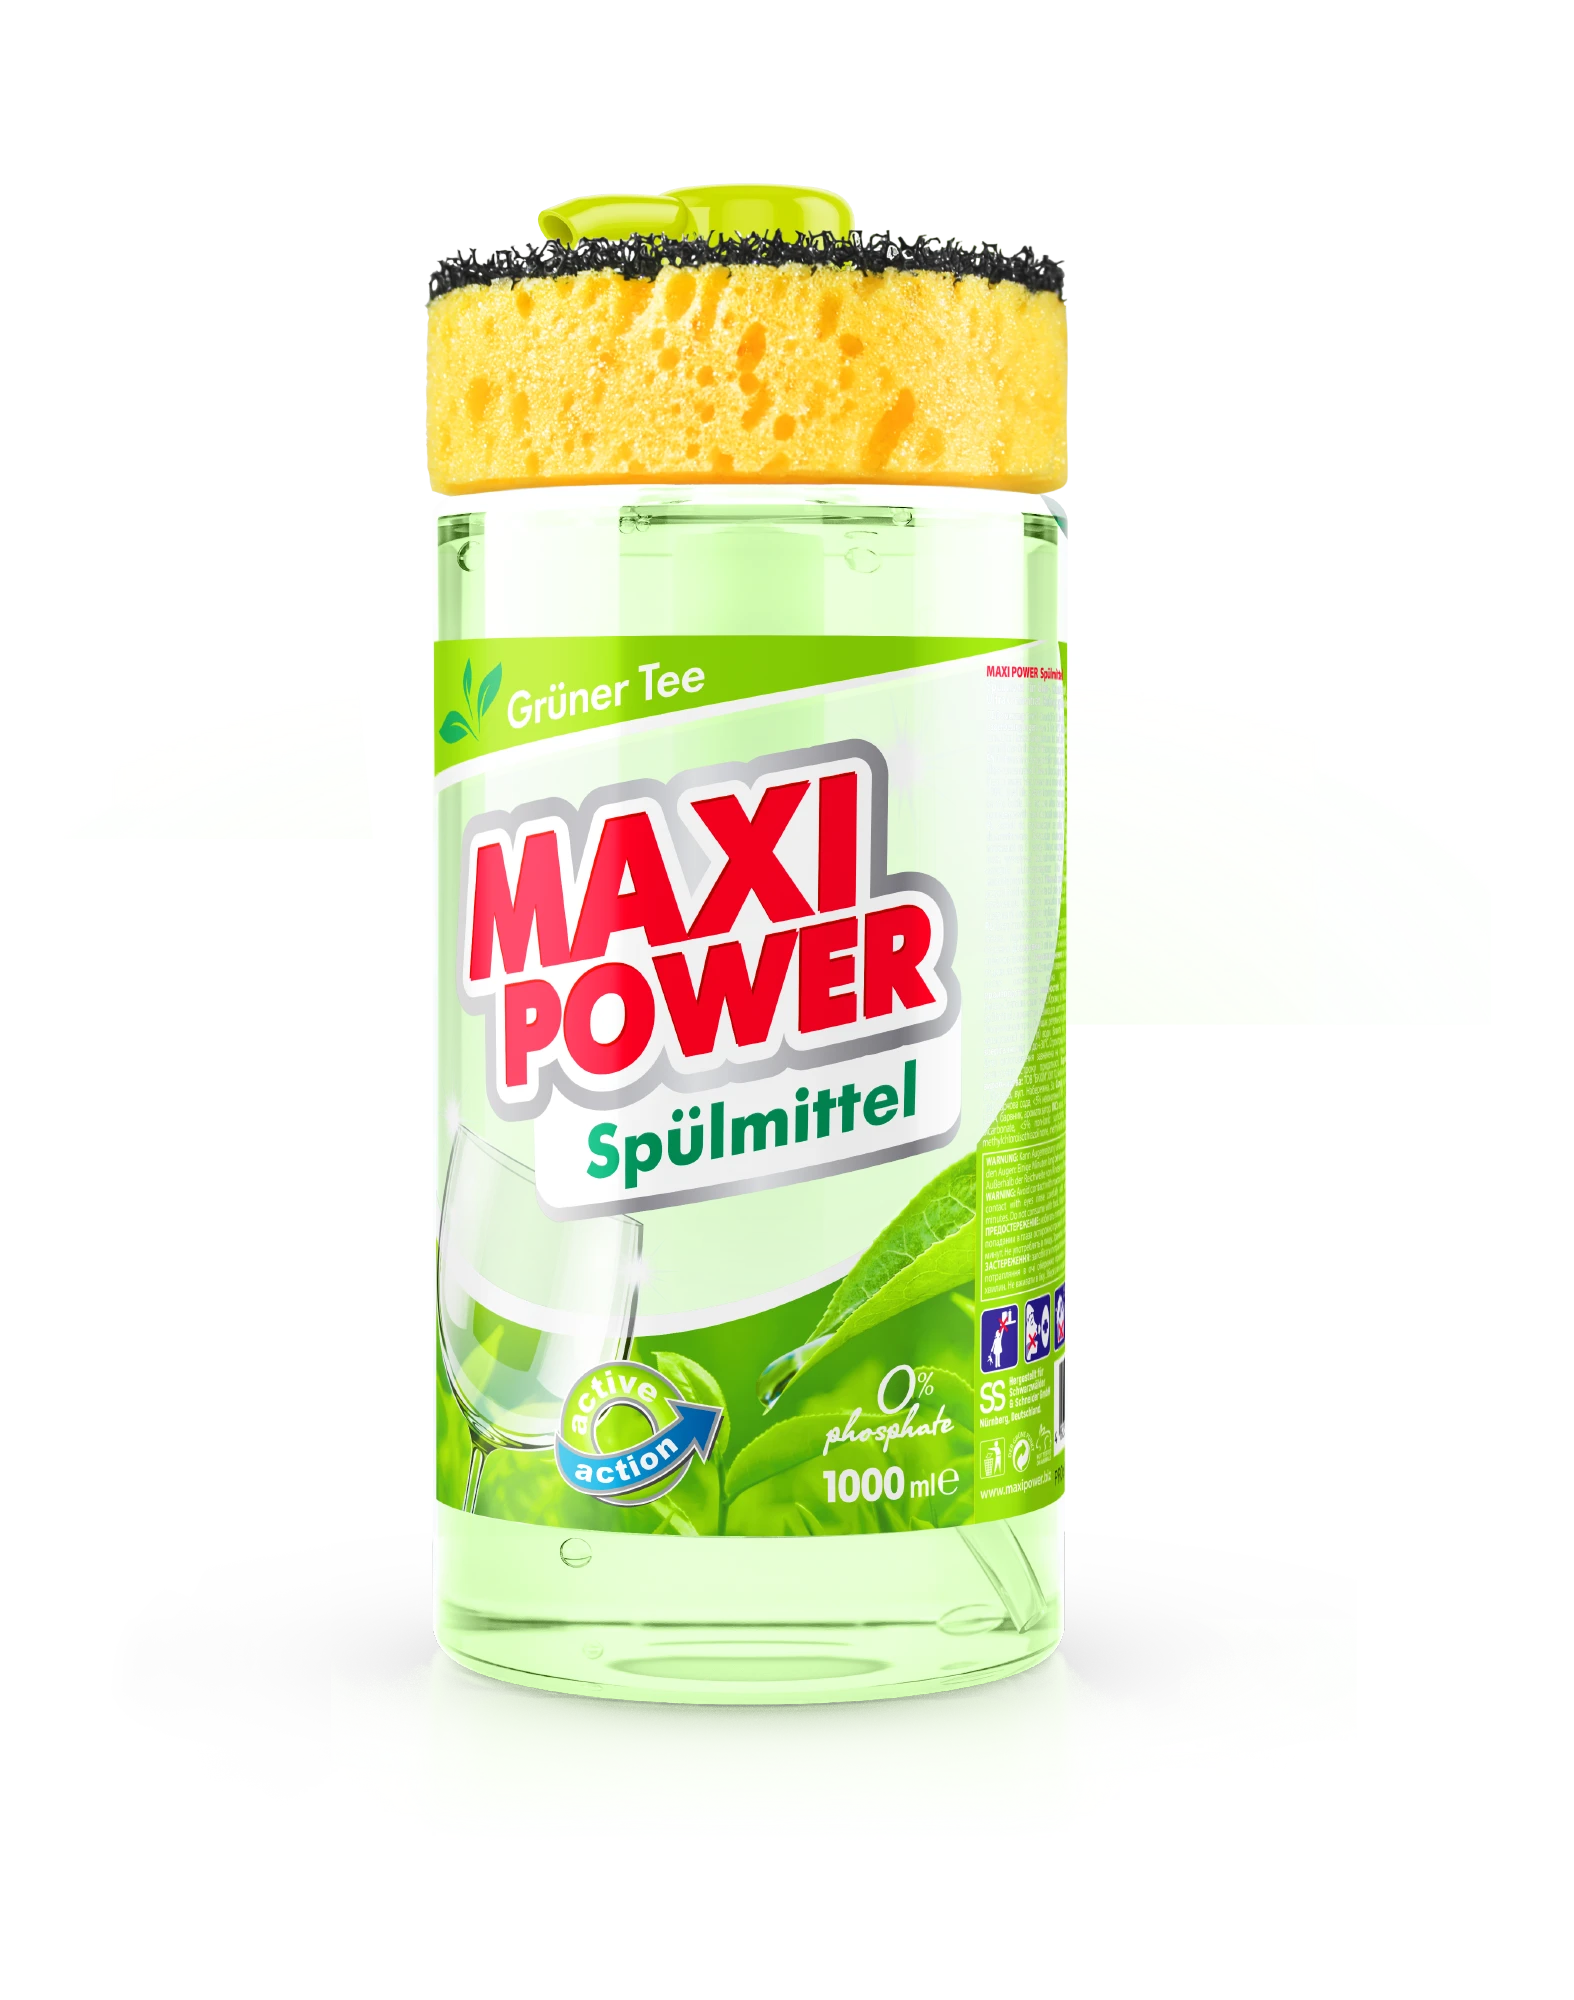 Maxi Power Средство для посуды​ Green tea